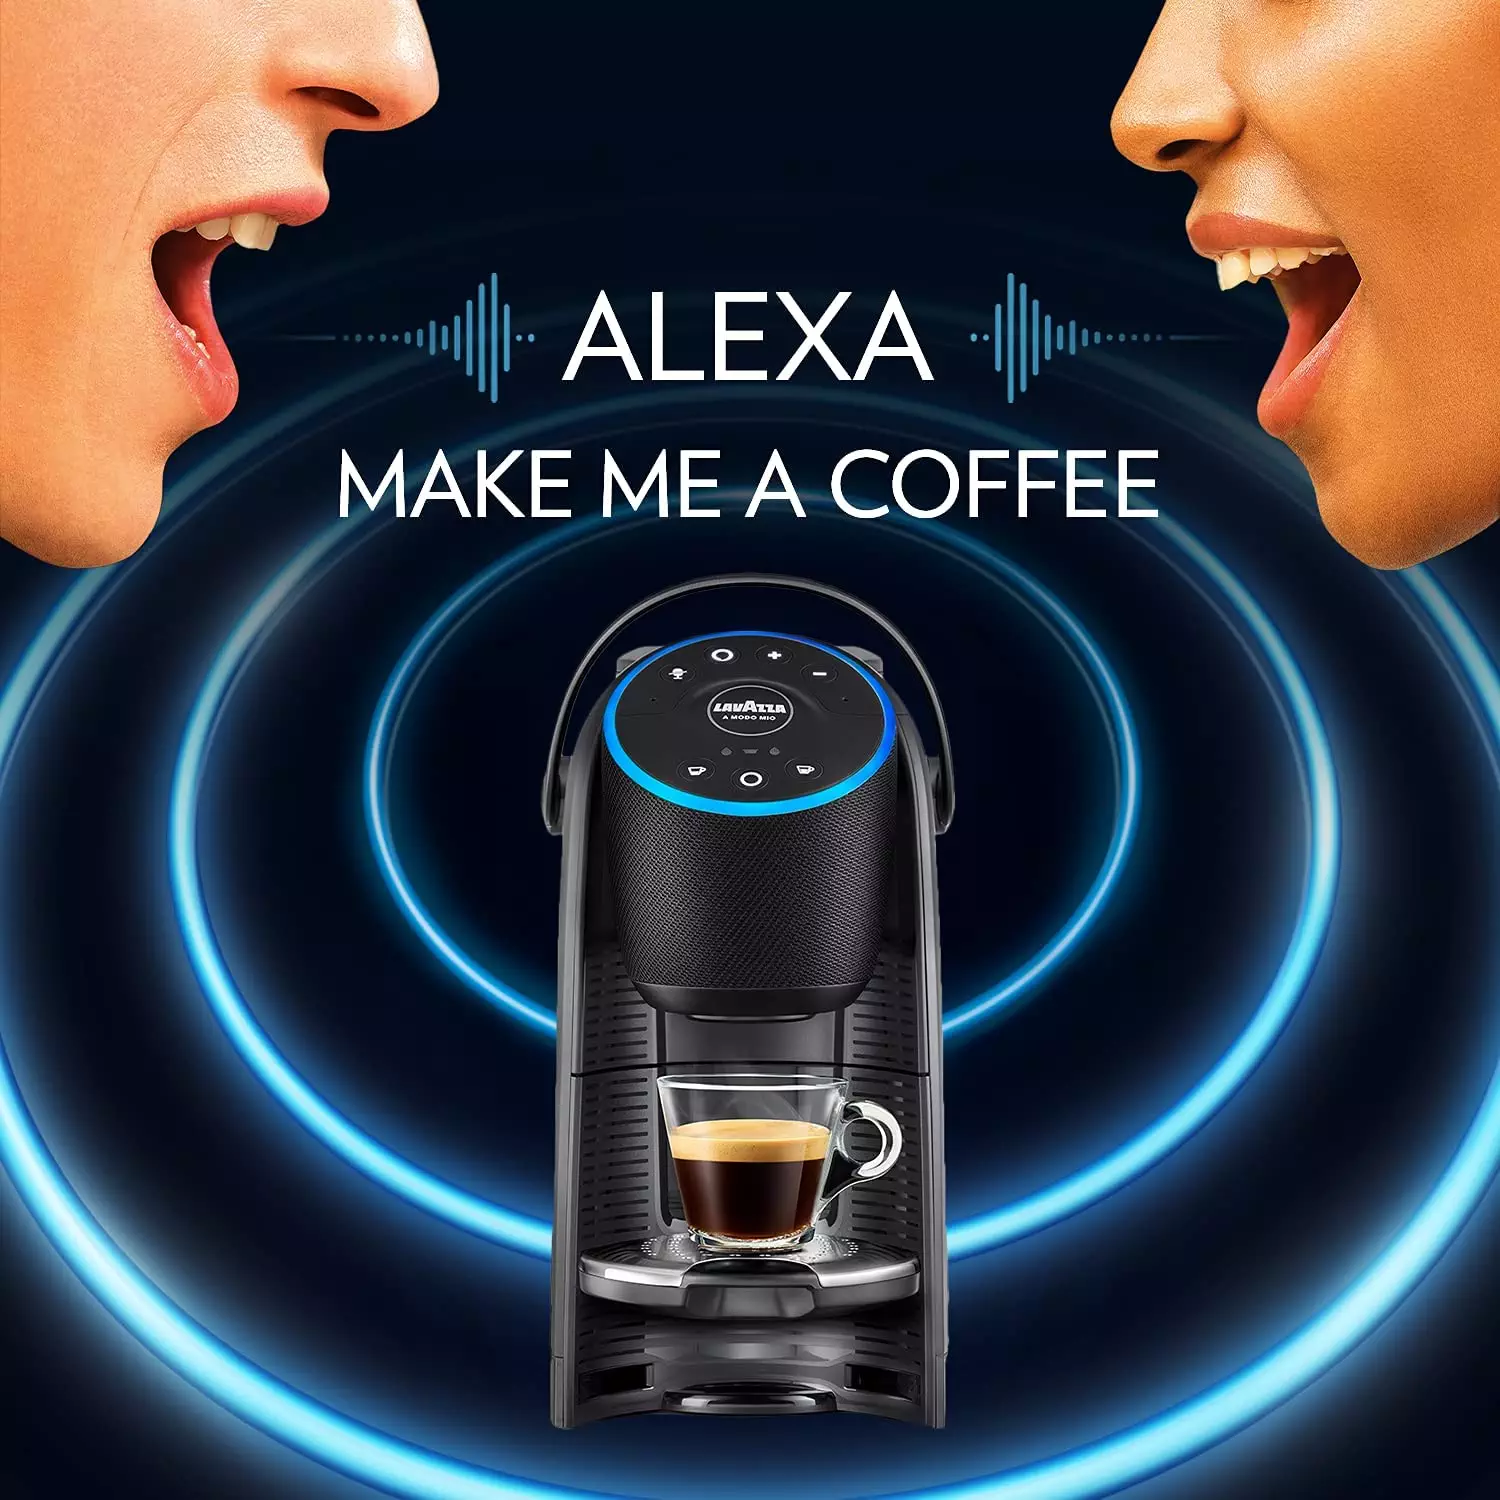 lavazza-coffee-machine-with-alexa